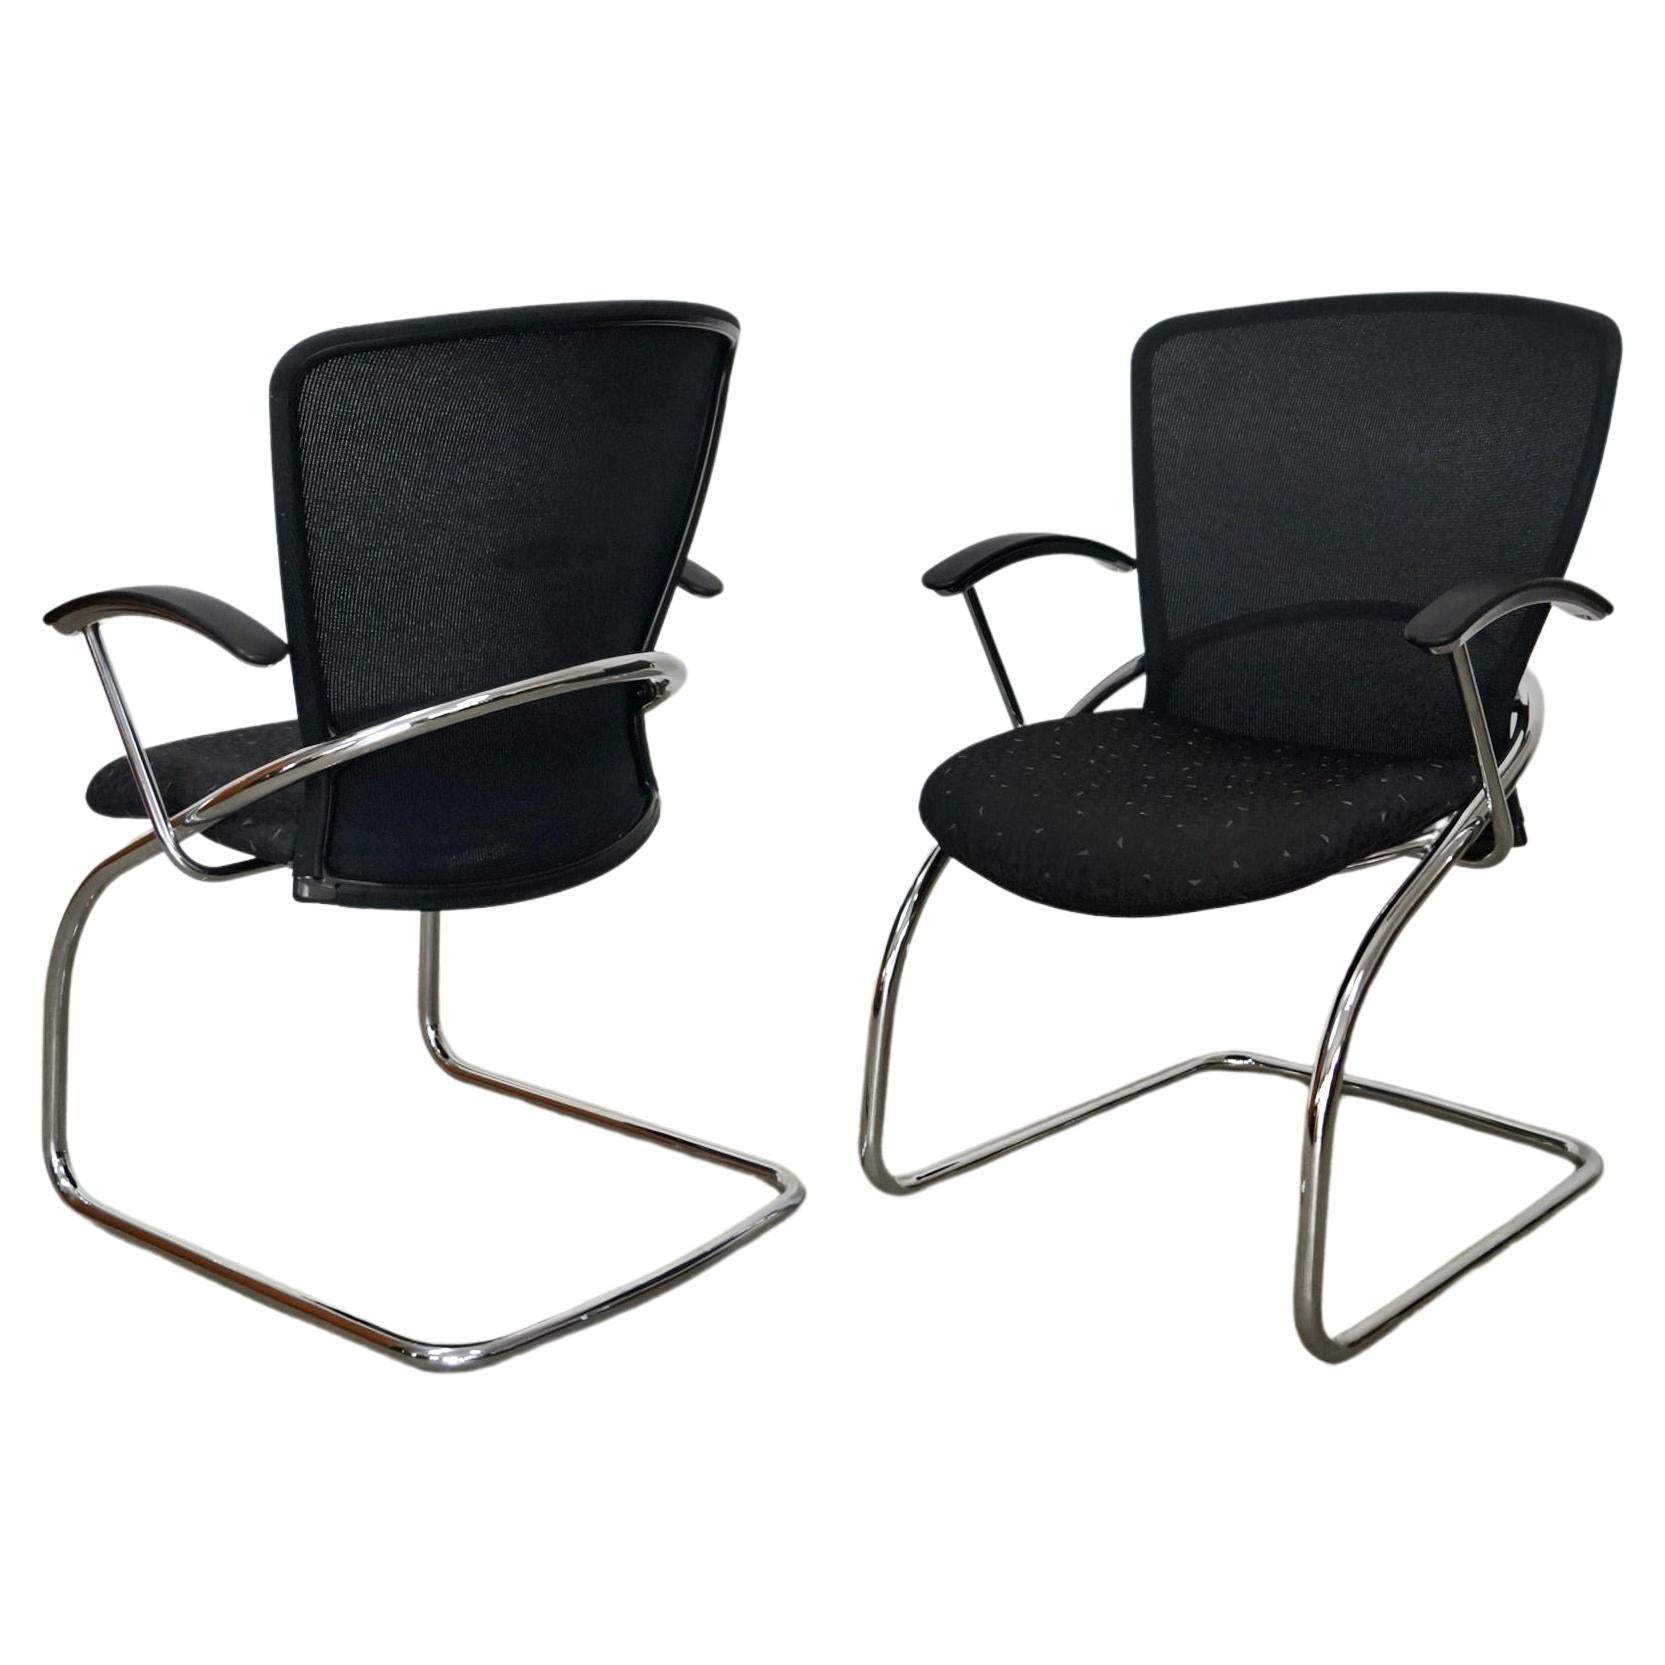 1990's Postmodern German Chrome Cantilever Arm Chairs - A Pair